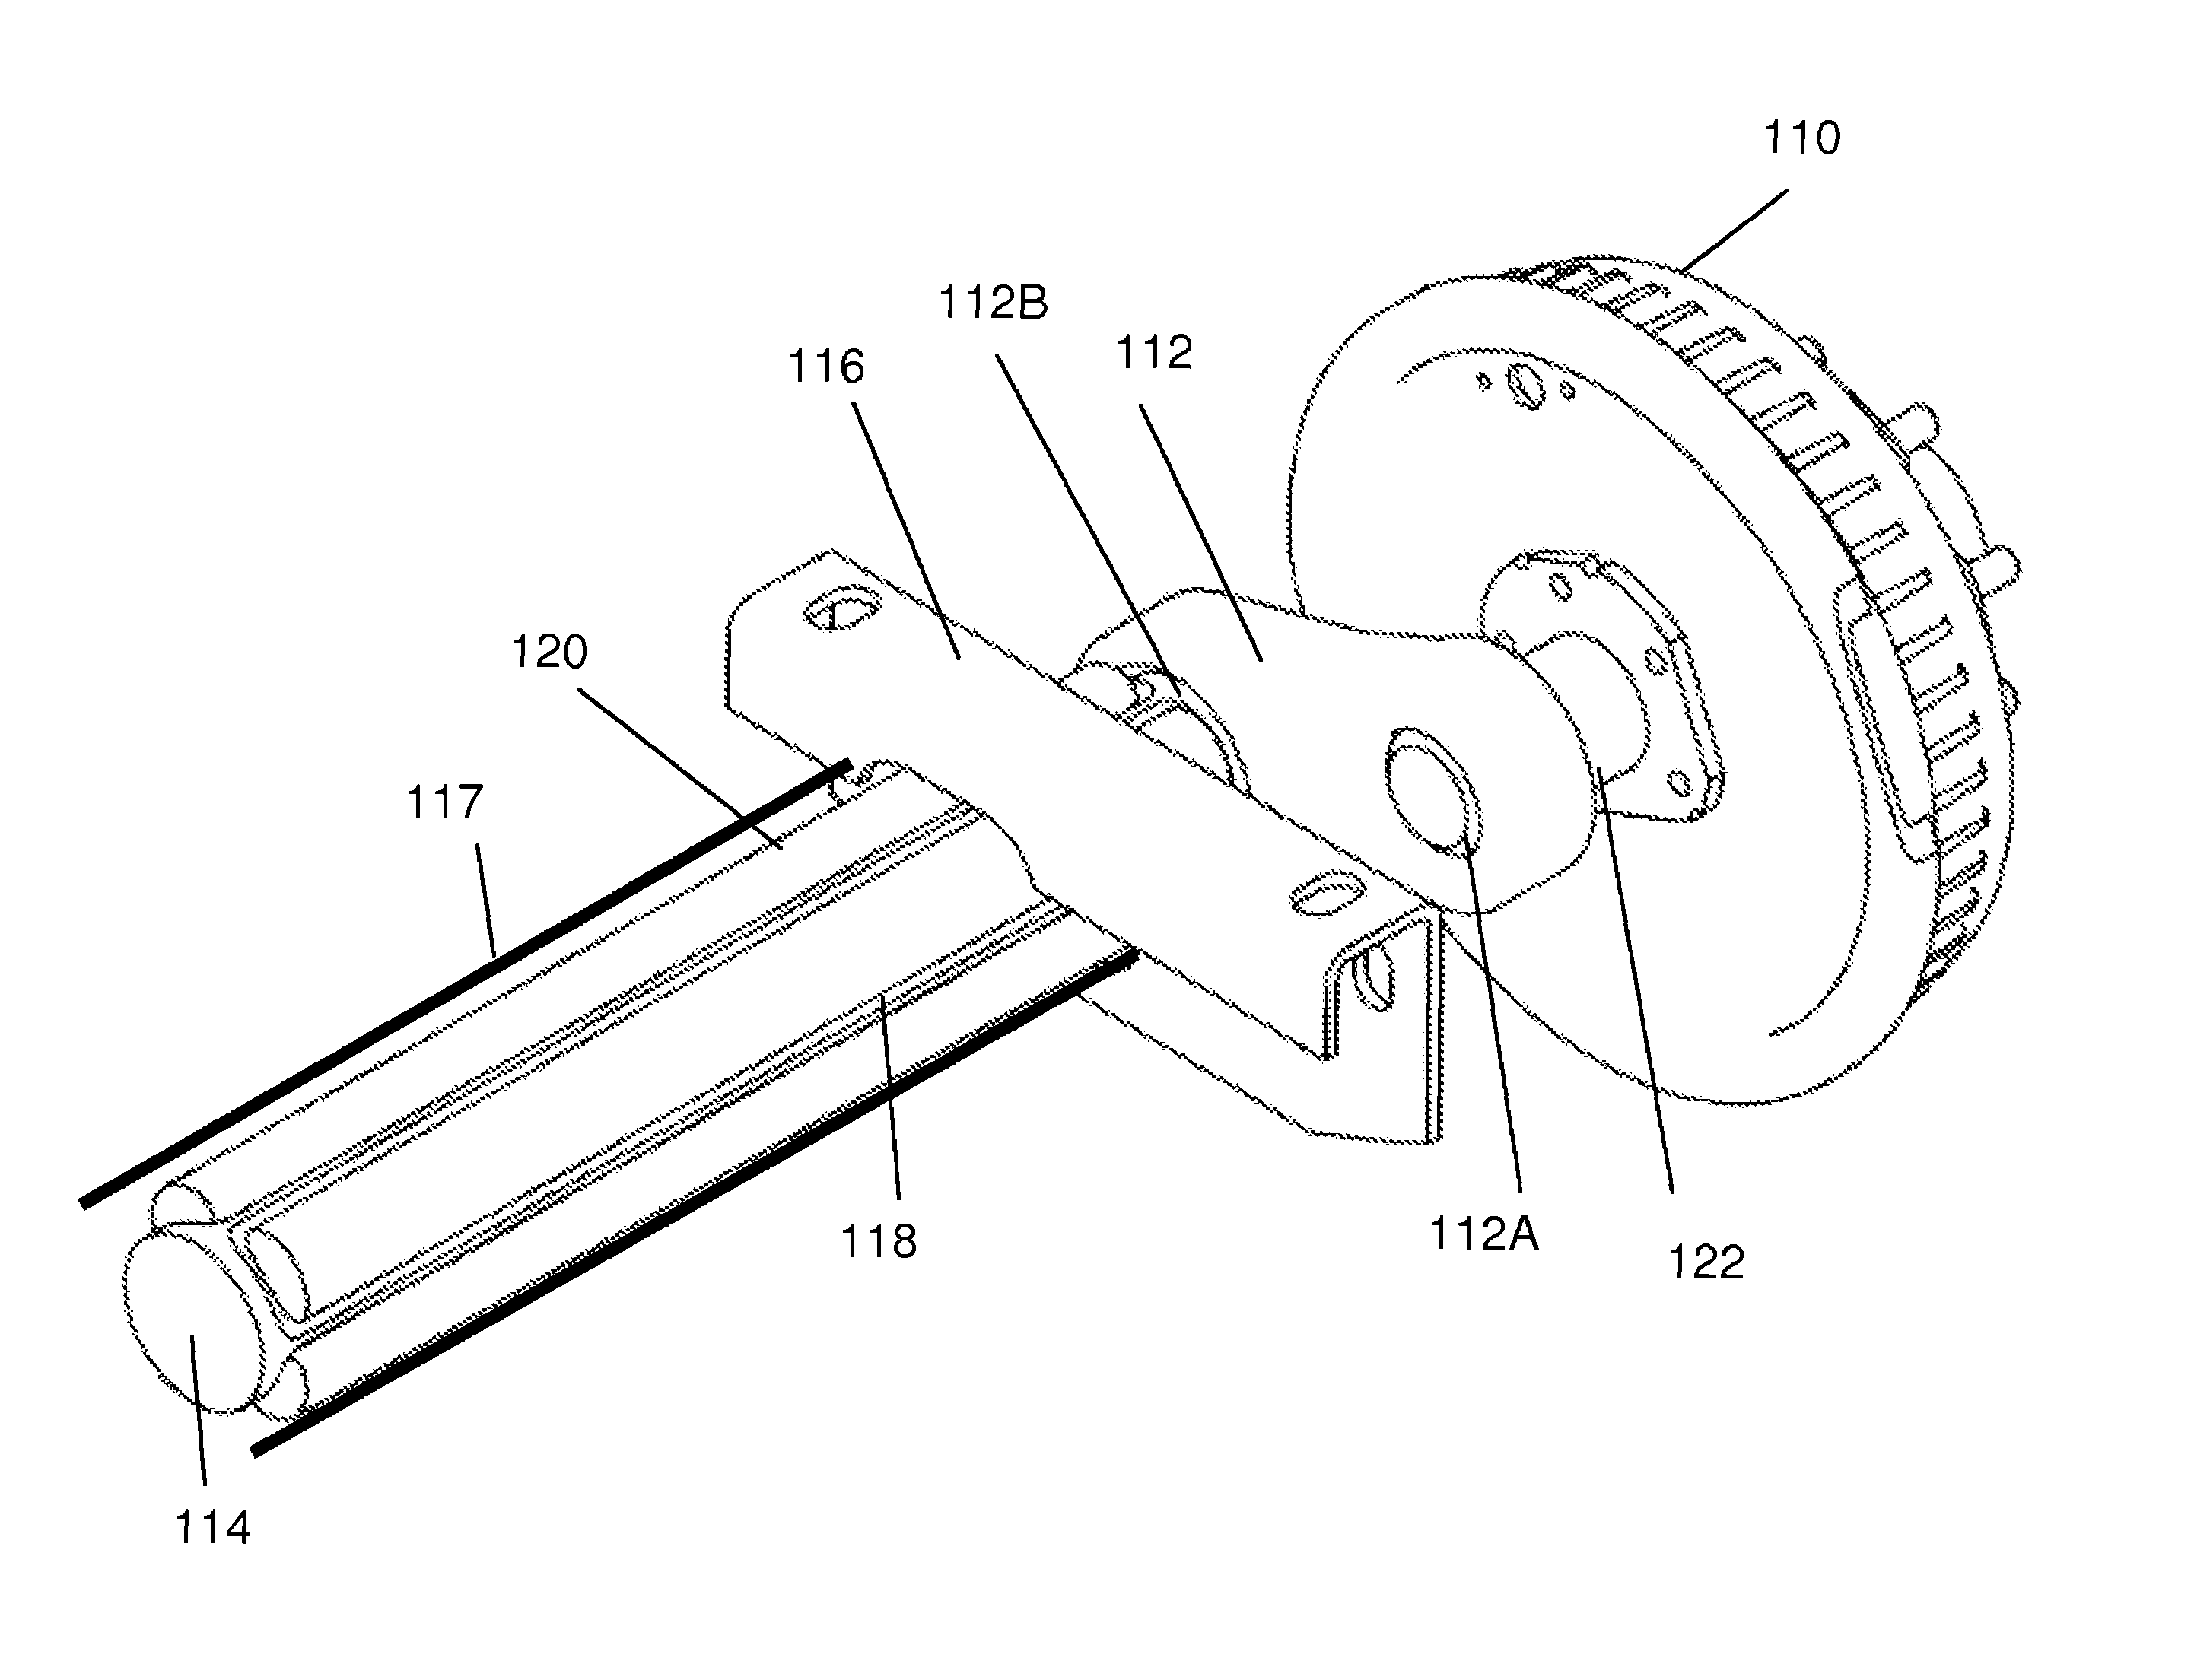 Triple axle with rubber torsion mechanism